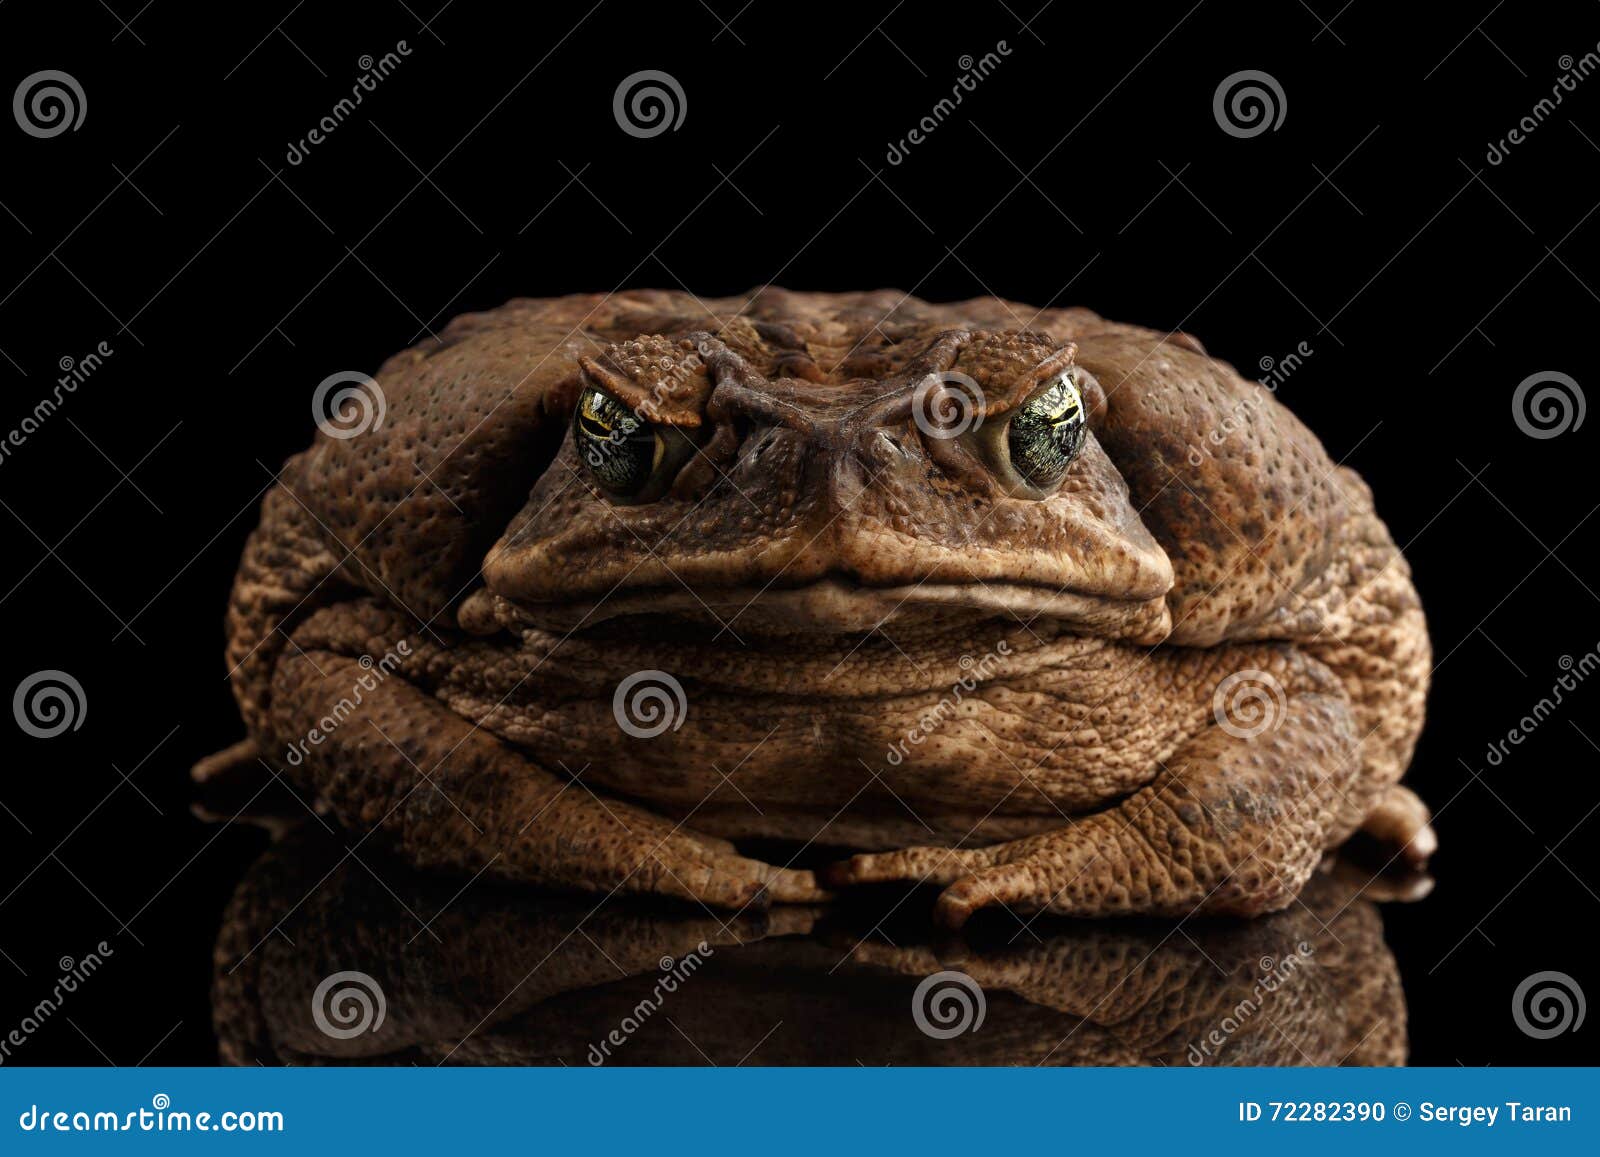 cane toad - bufo marinus, giant neotropical, marine toad black